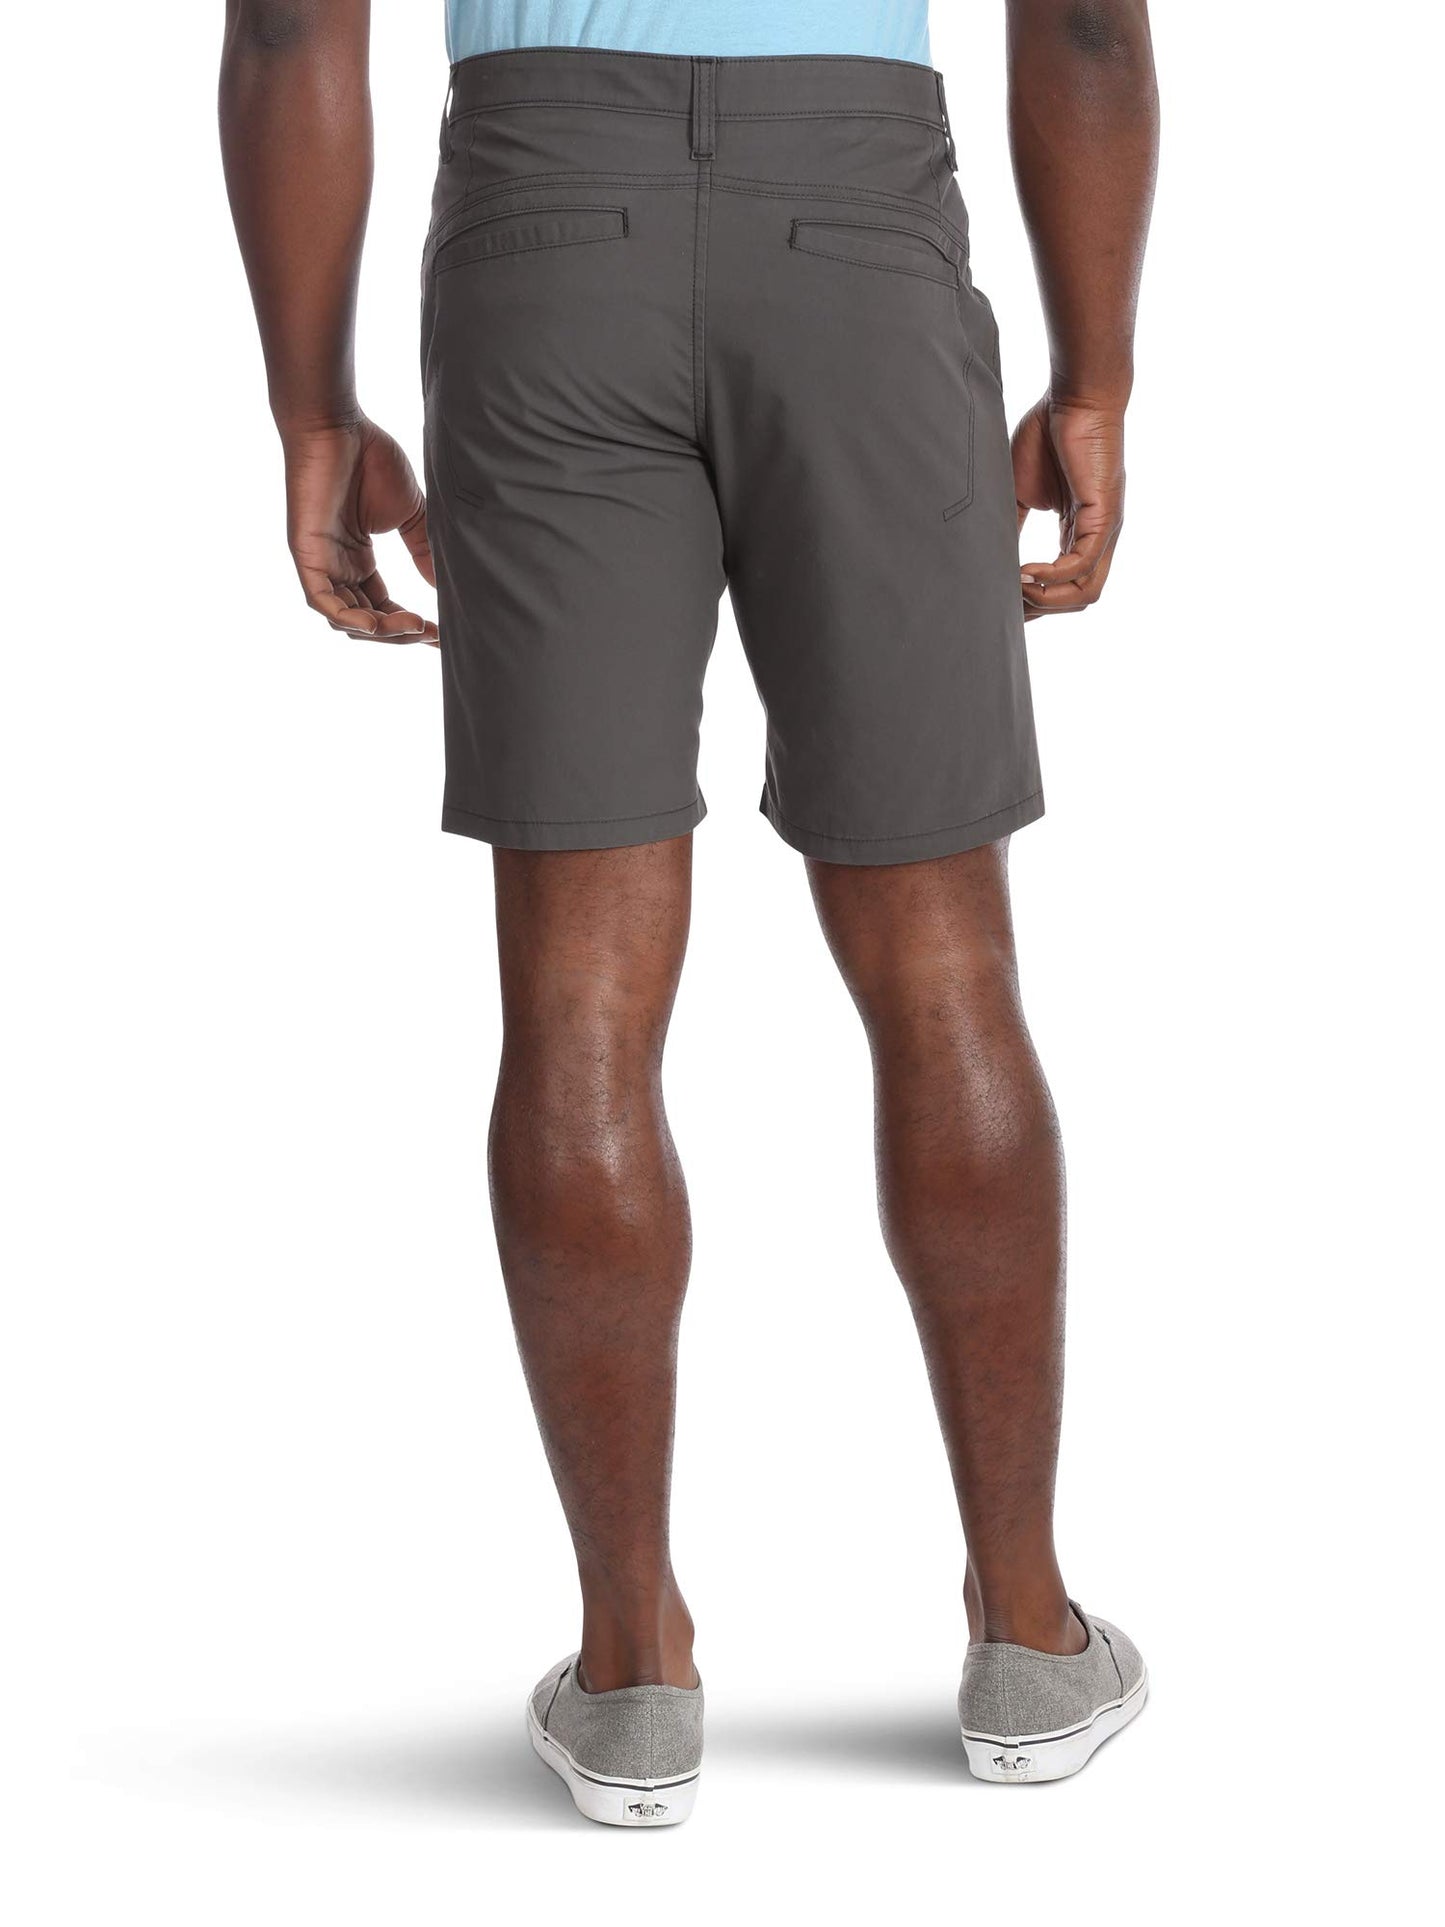 Wrangler Authentics Men's Performance Comfort Flex Flat Front Short, Anthracite, 36